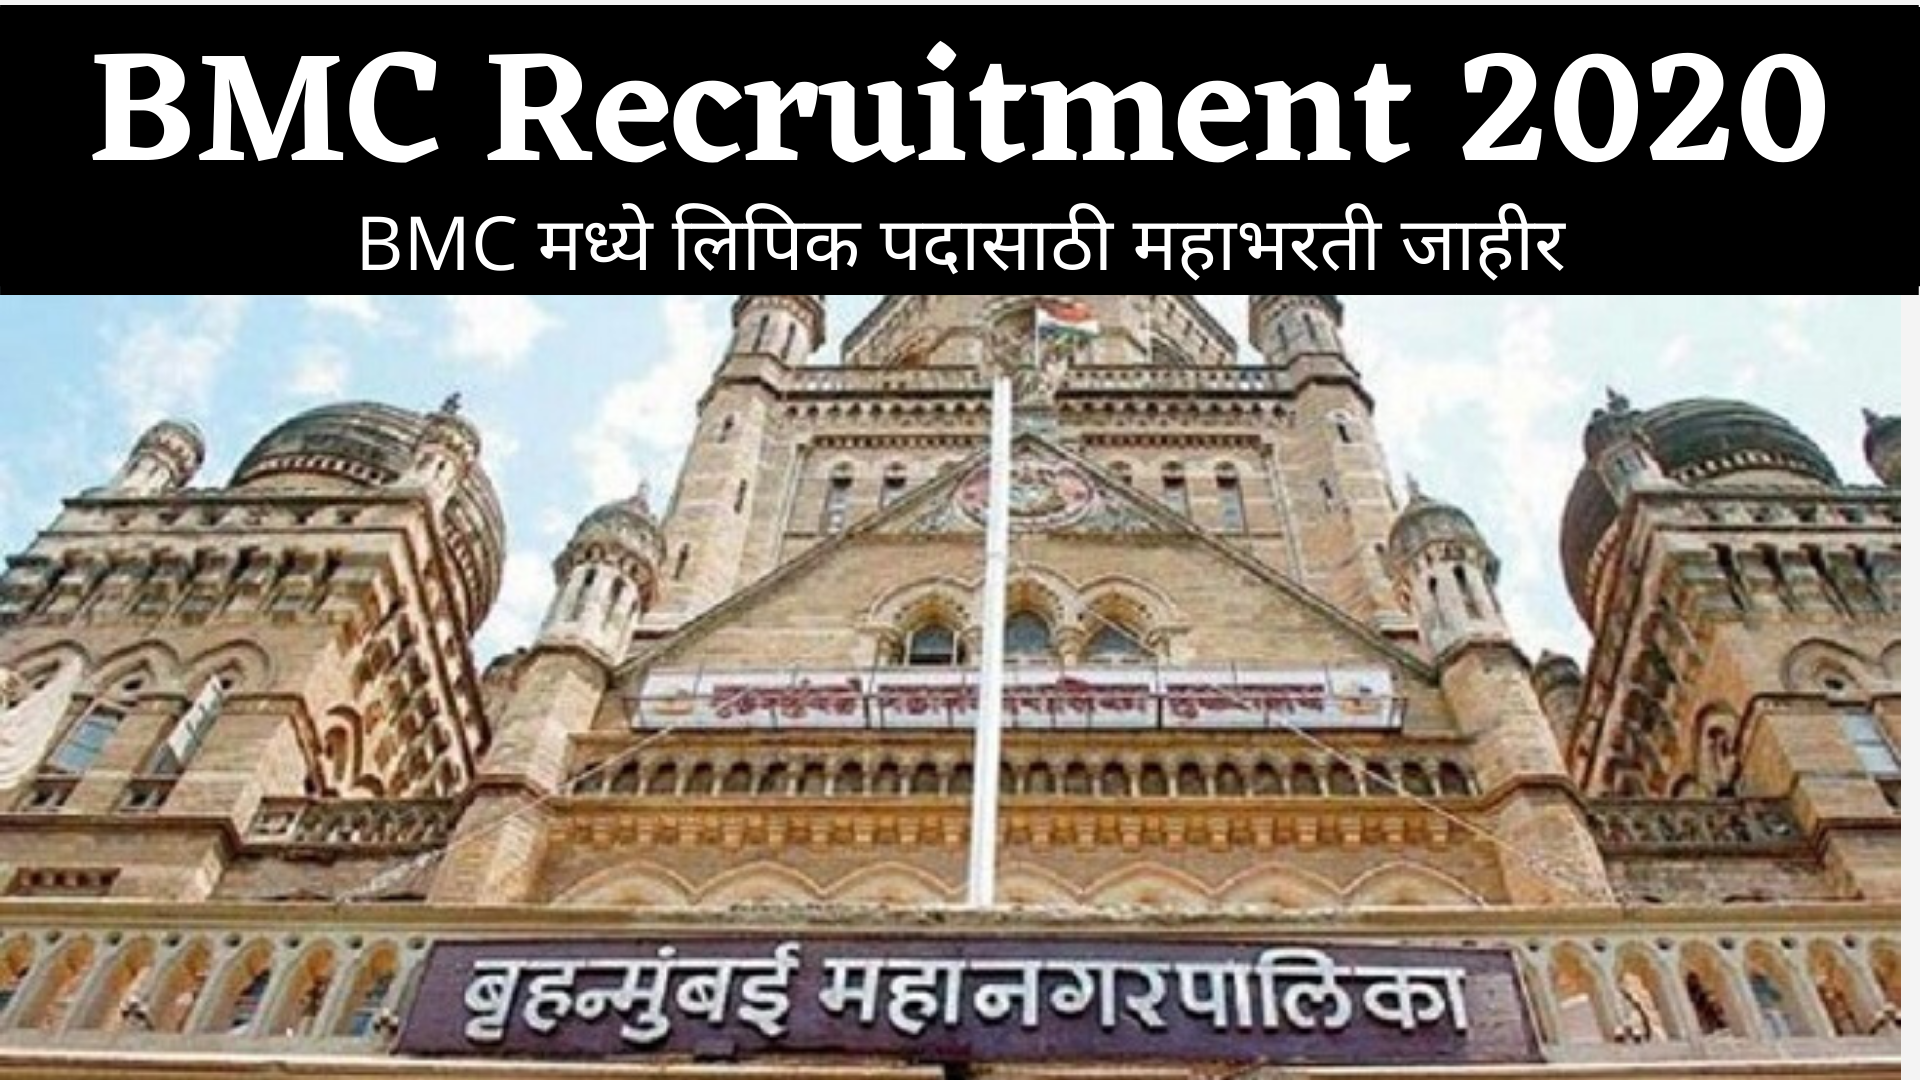 bmc recruitment 2020 in Mumbai, bmc recruitment 2020 for engineers, bmc recruitment 2020 for engineers, bmc recruitment 2019-20, bmc recruitment 2020 apply online, bmc vacancy for clerk, bmc clerk recruitment 2020